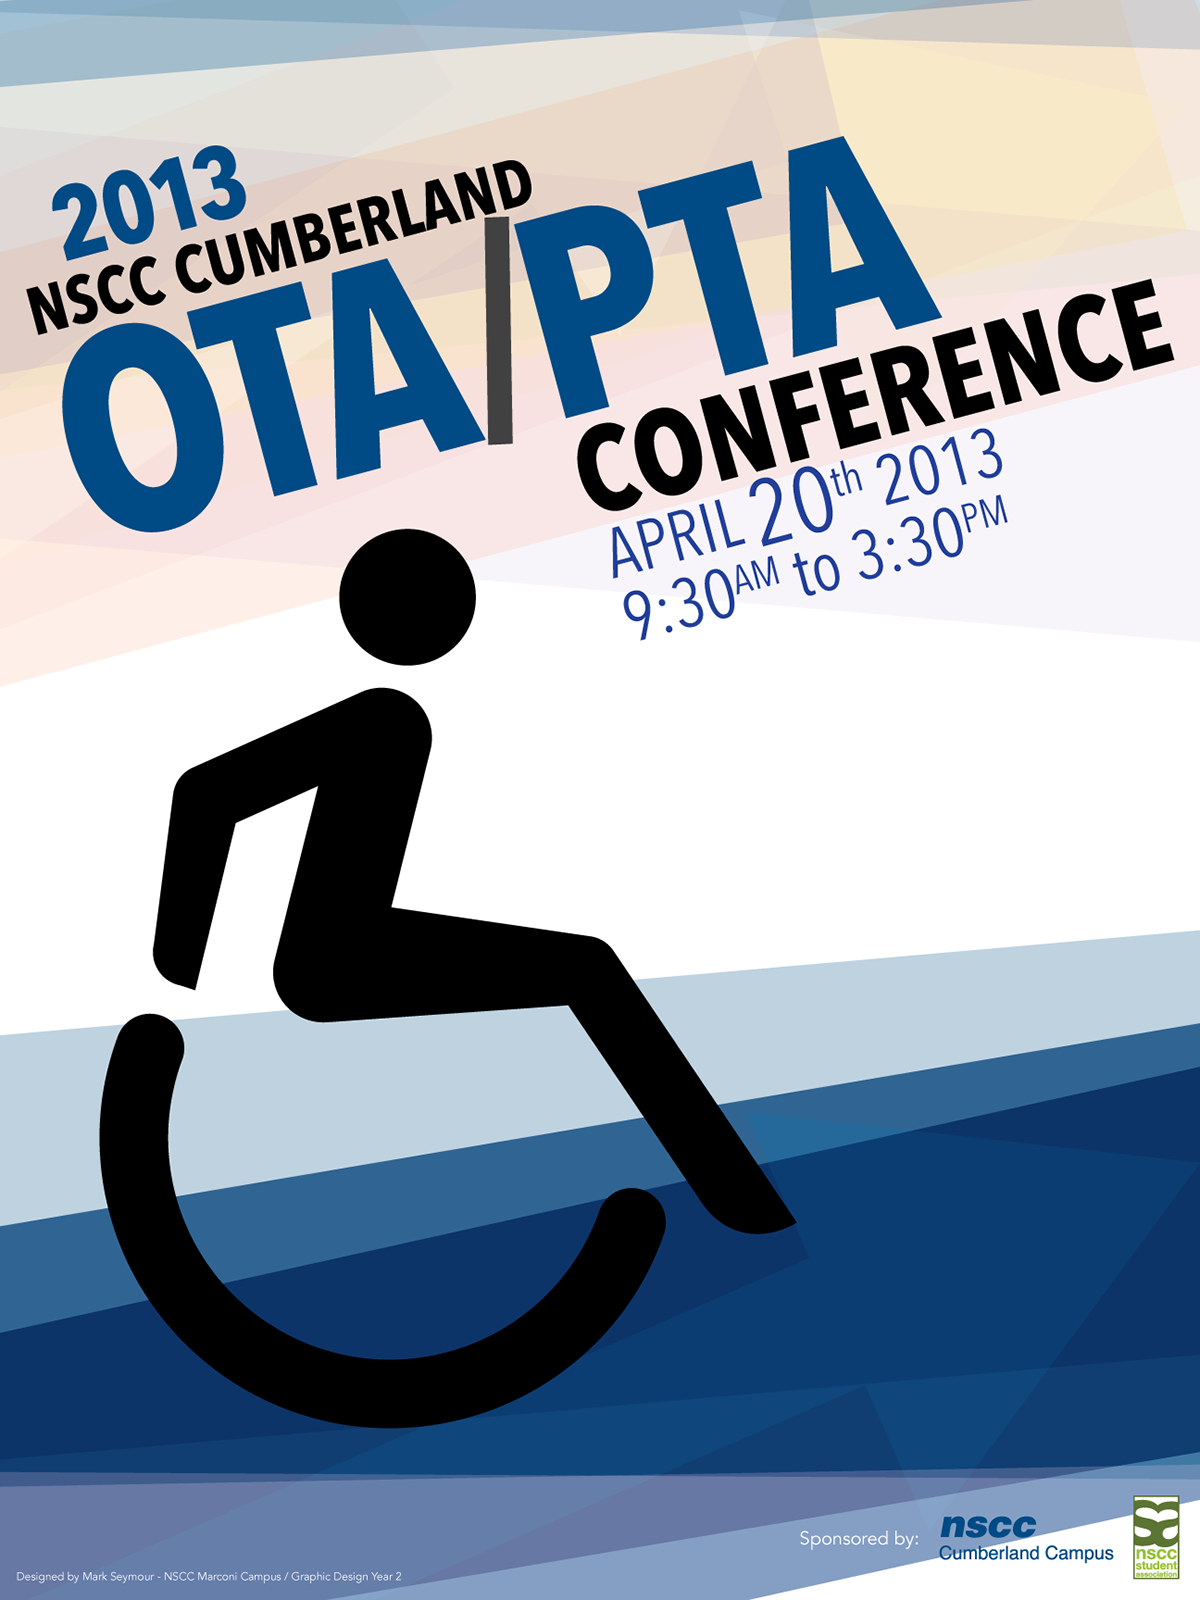 nscc OTA/PTA poster Invitation pamphlet